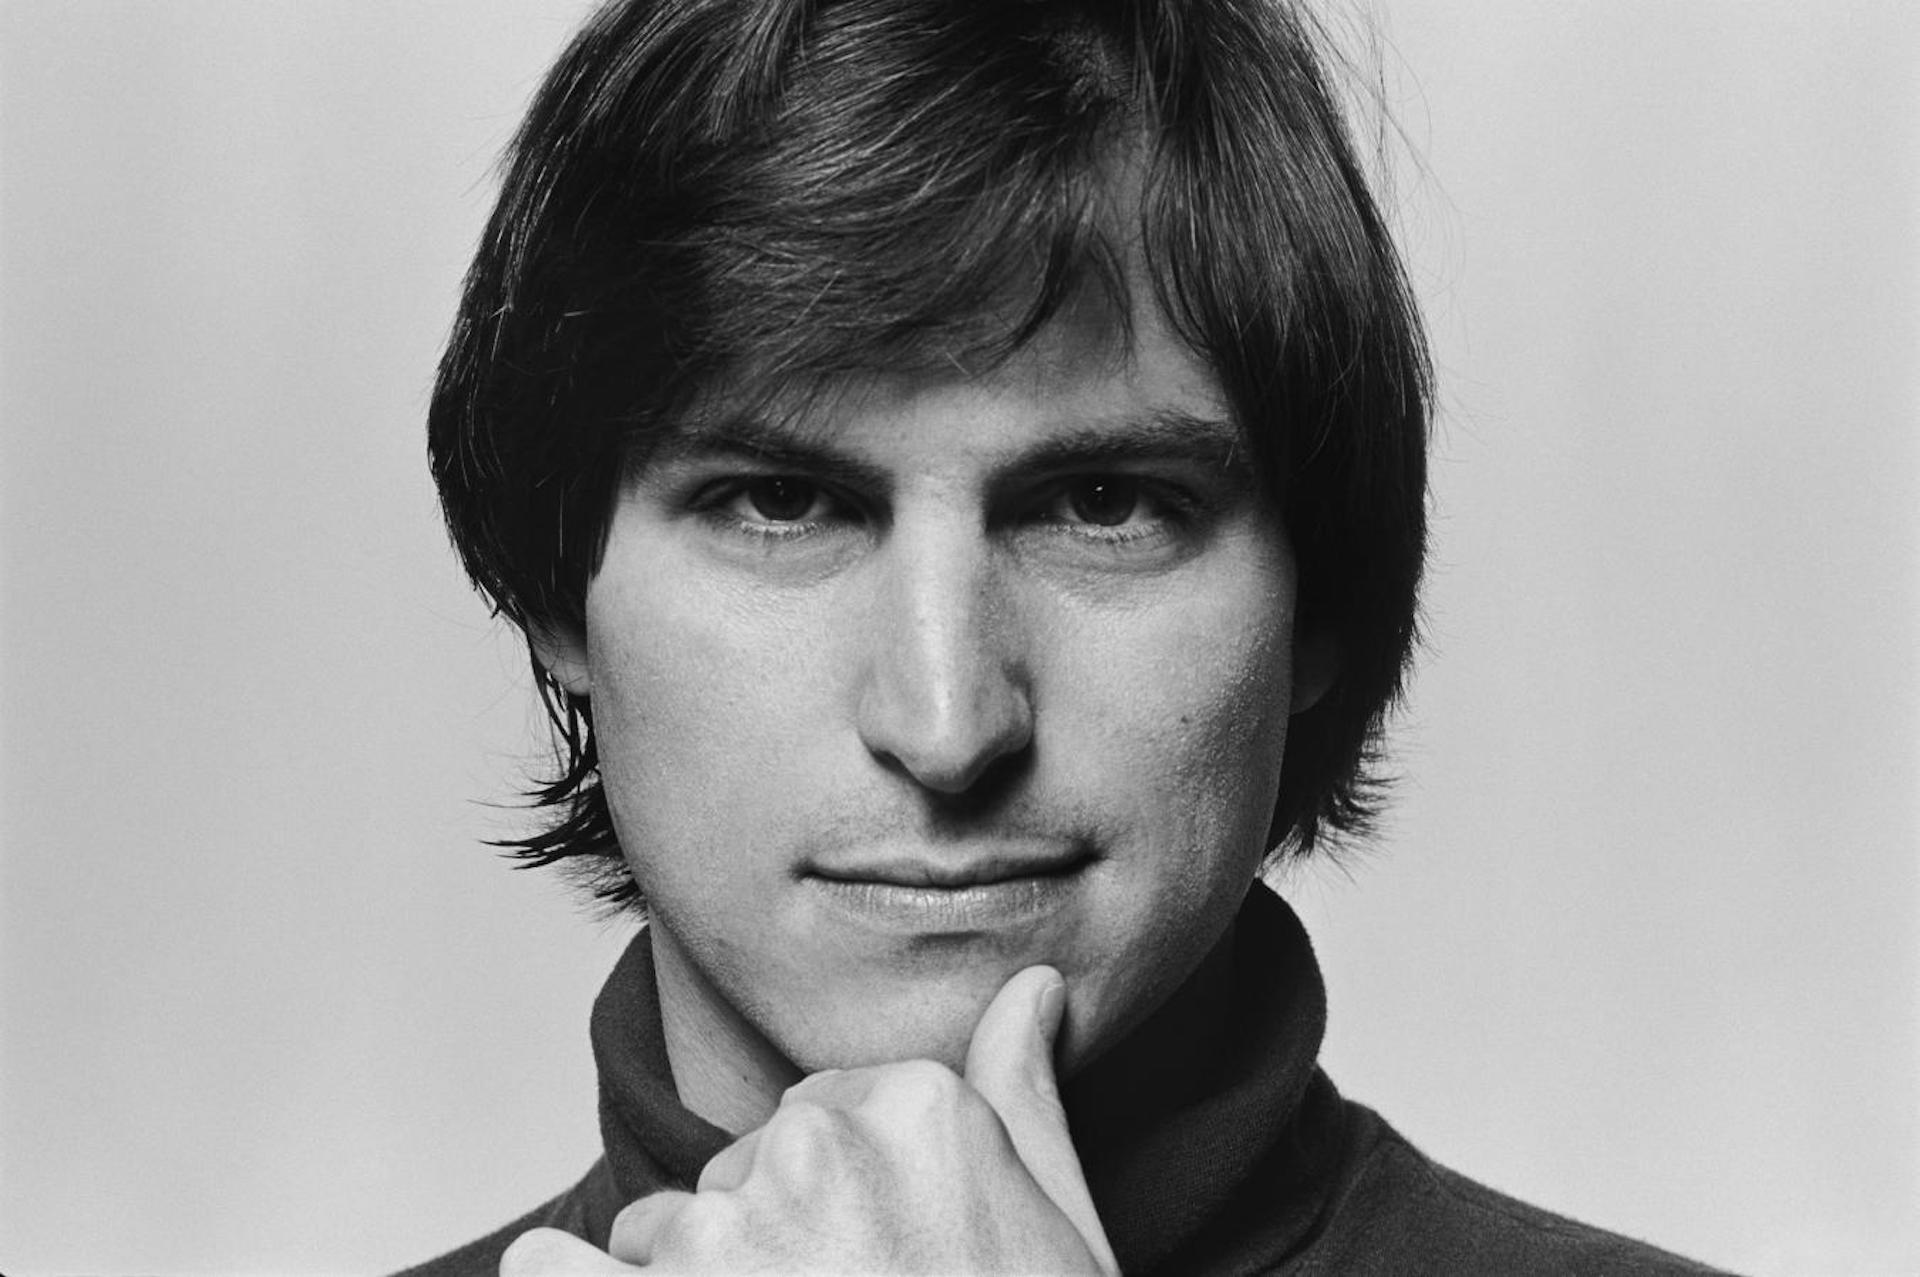 How Steve Jobs' uncontested genius revolutionized technology forever